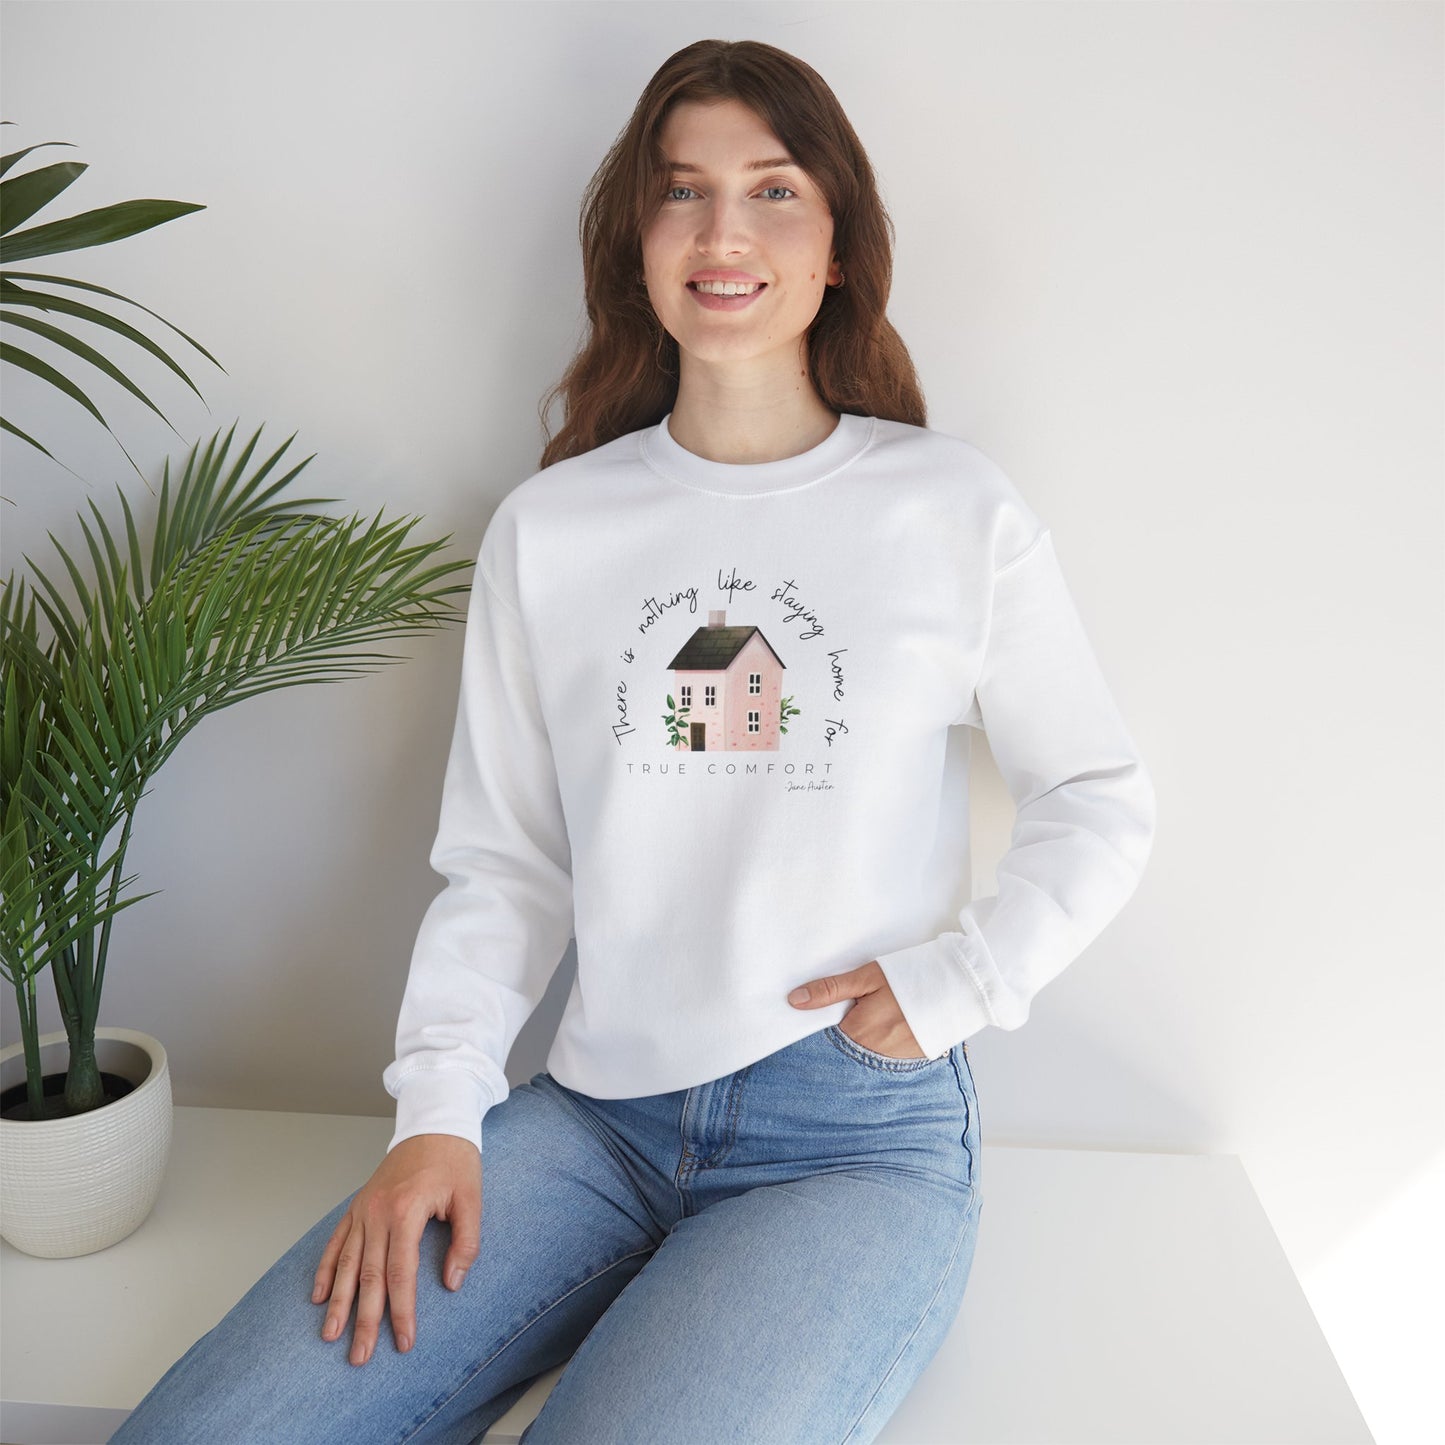 Sweatshirt:  Jane Austen "Staying Home" Crewneck Sweatshirt